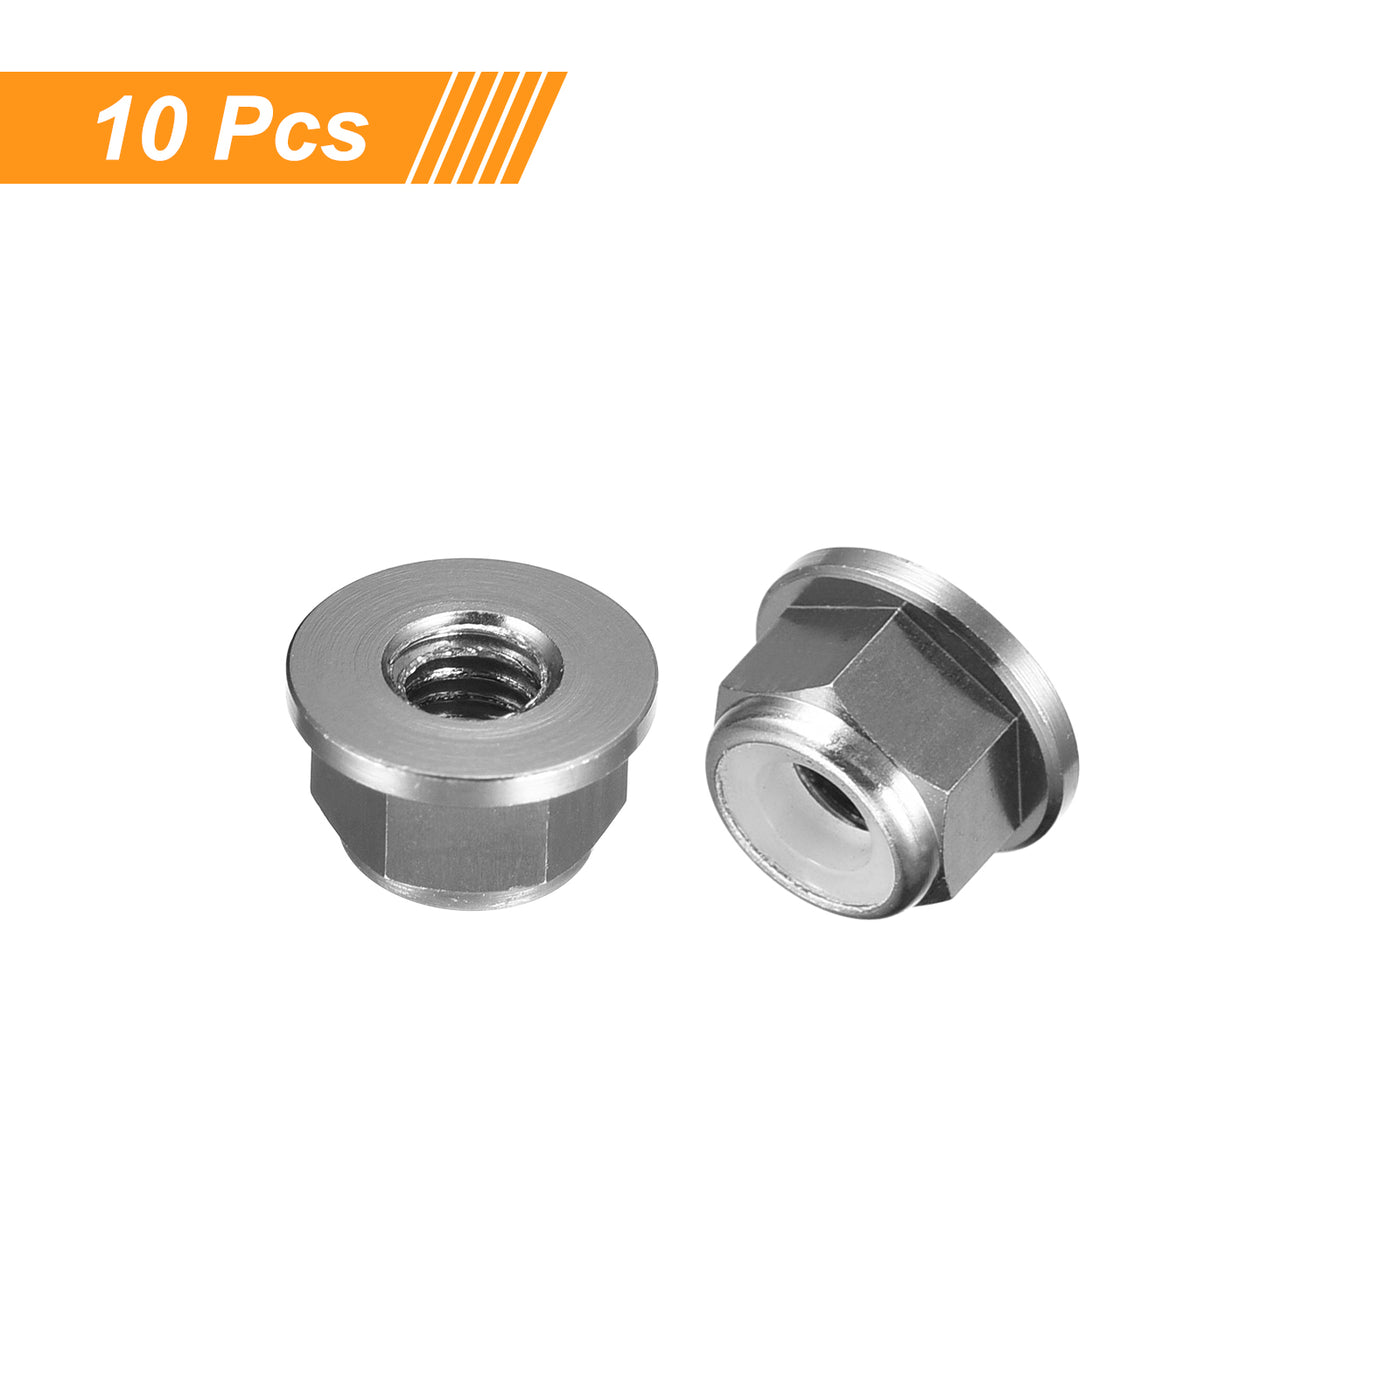 uxcell Uxcell Nylon Insert Hex Lock Nuts, 10pcs - M4 x 0.7mm Aluminum Alloy Self-Locking Nut, Anodizing Flange Lock Nut for Fasteners (Titanium Gray)